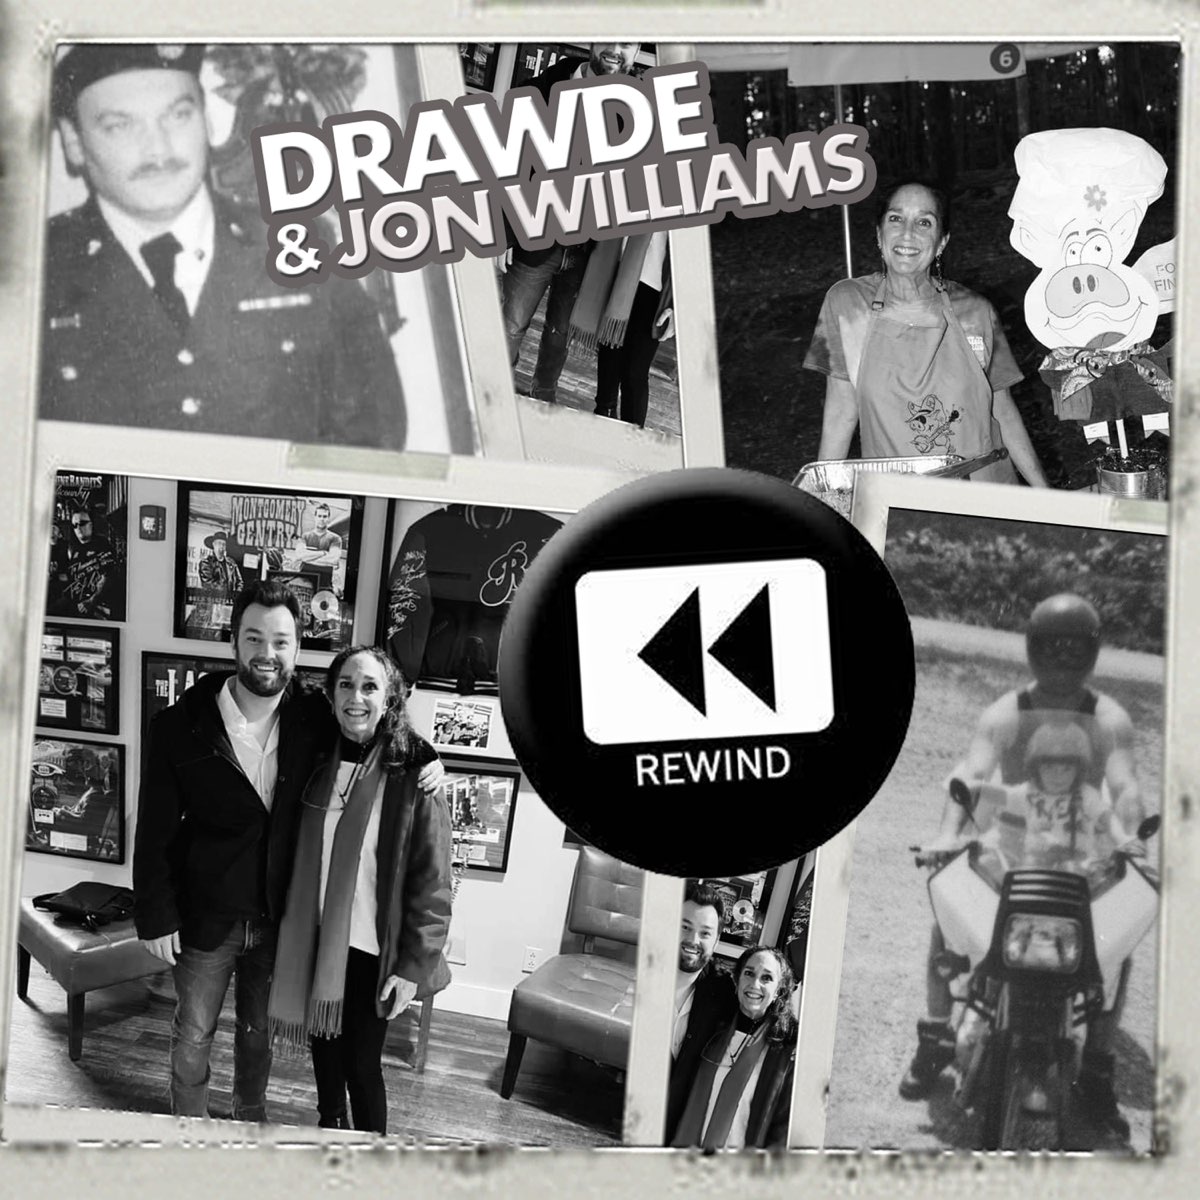 Rewind - Single - Album by Drawde & Jon Williams - Apple Music